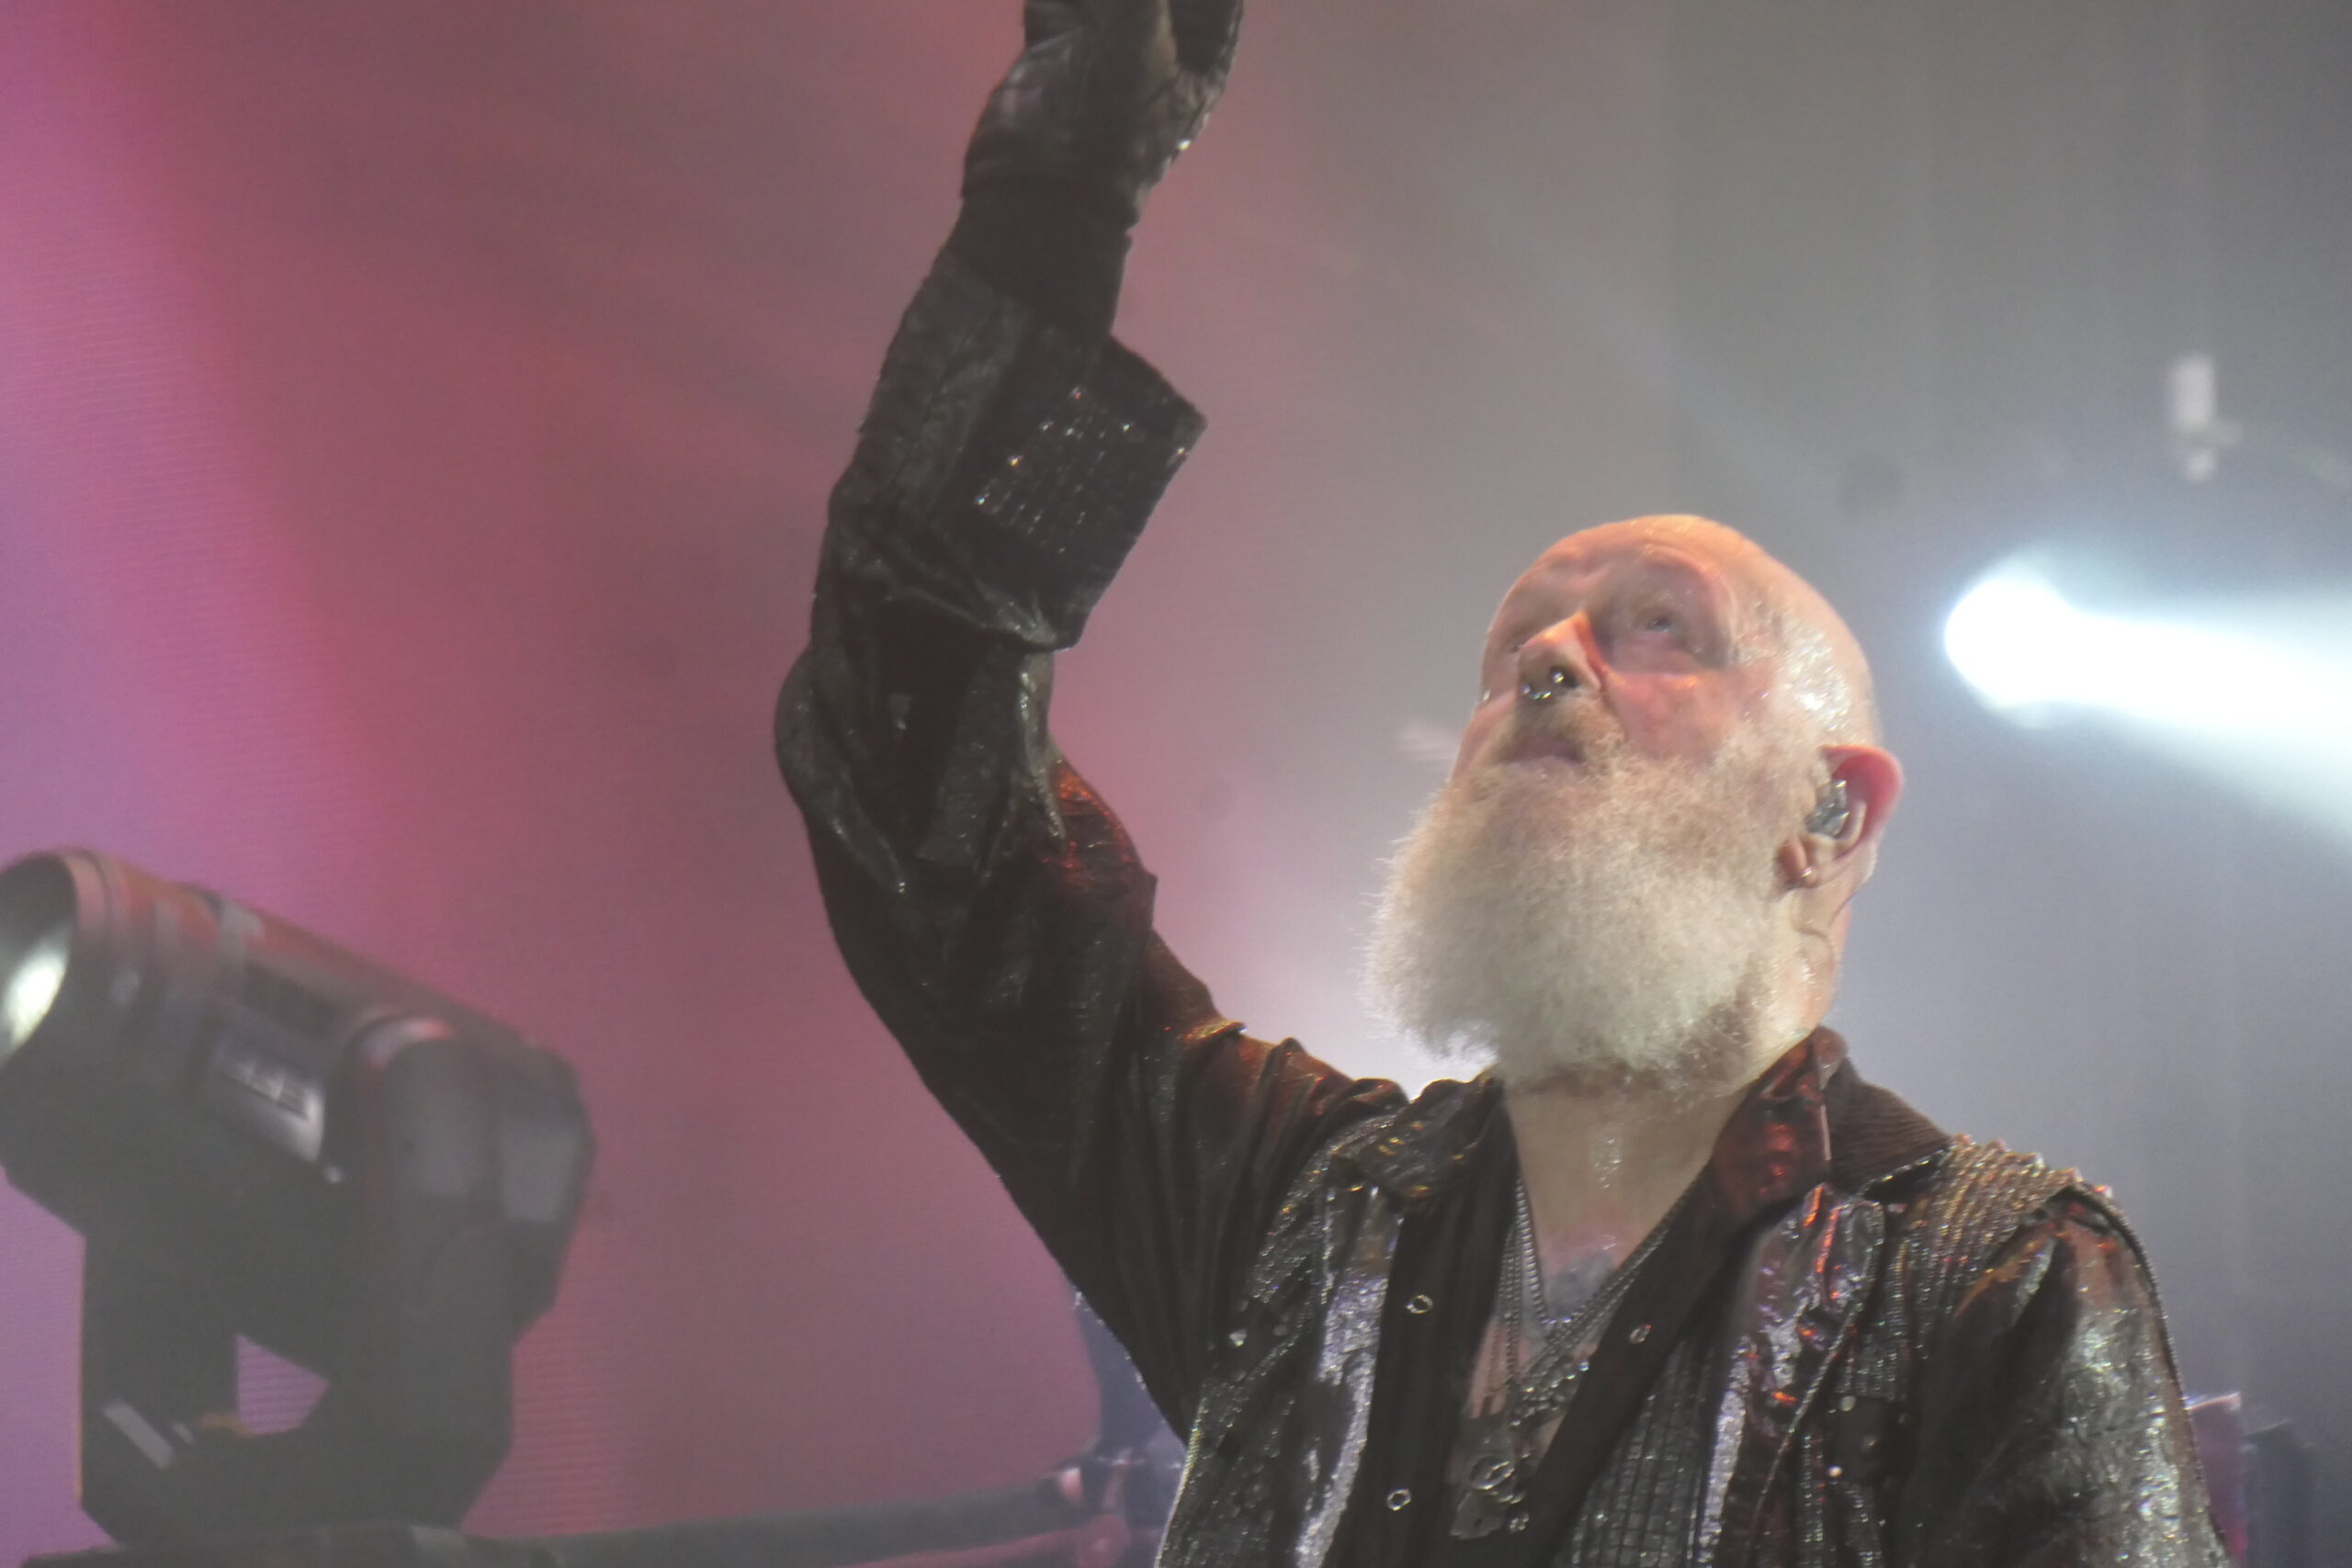 Gig review: Judas Priest + Saxon + Uriah Heep at Wembley Arena